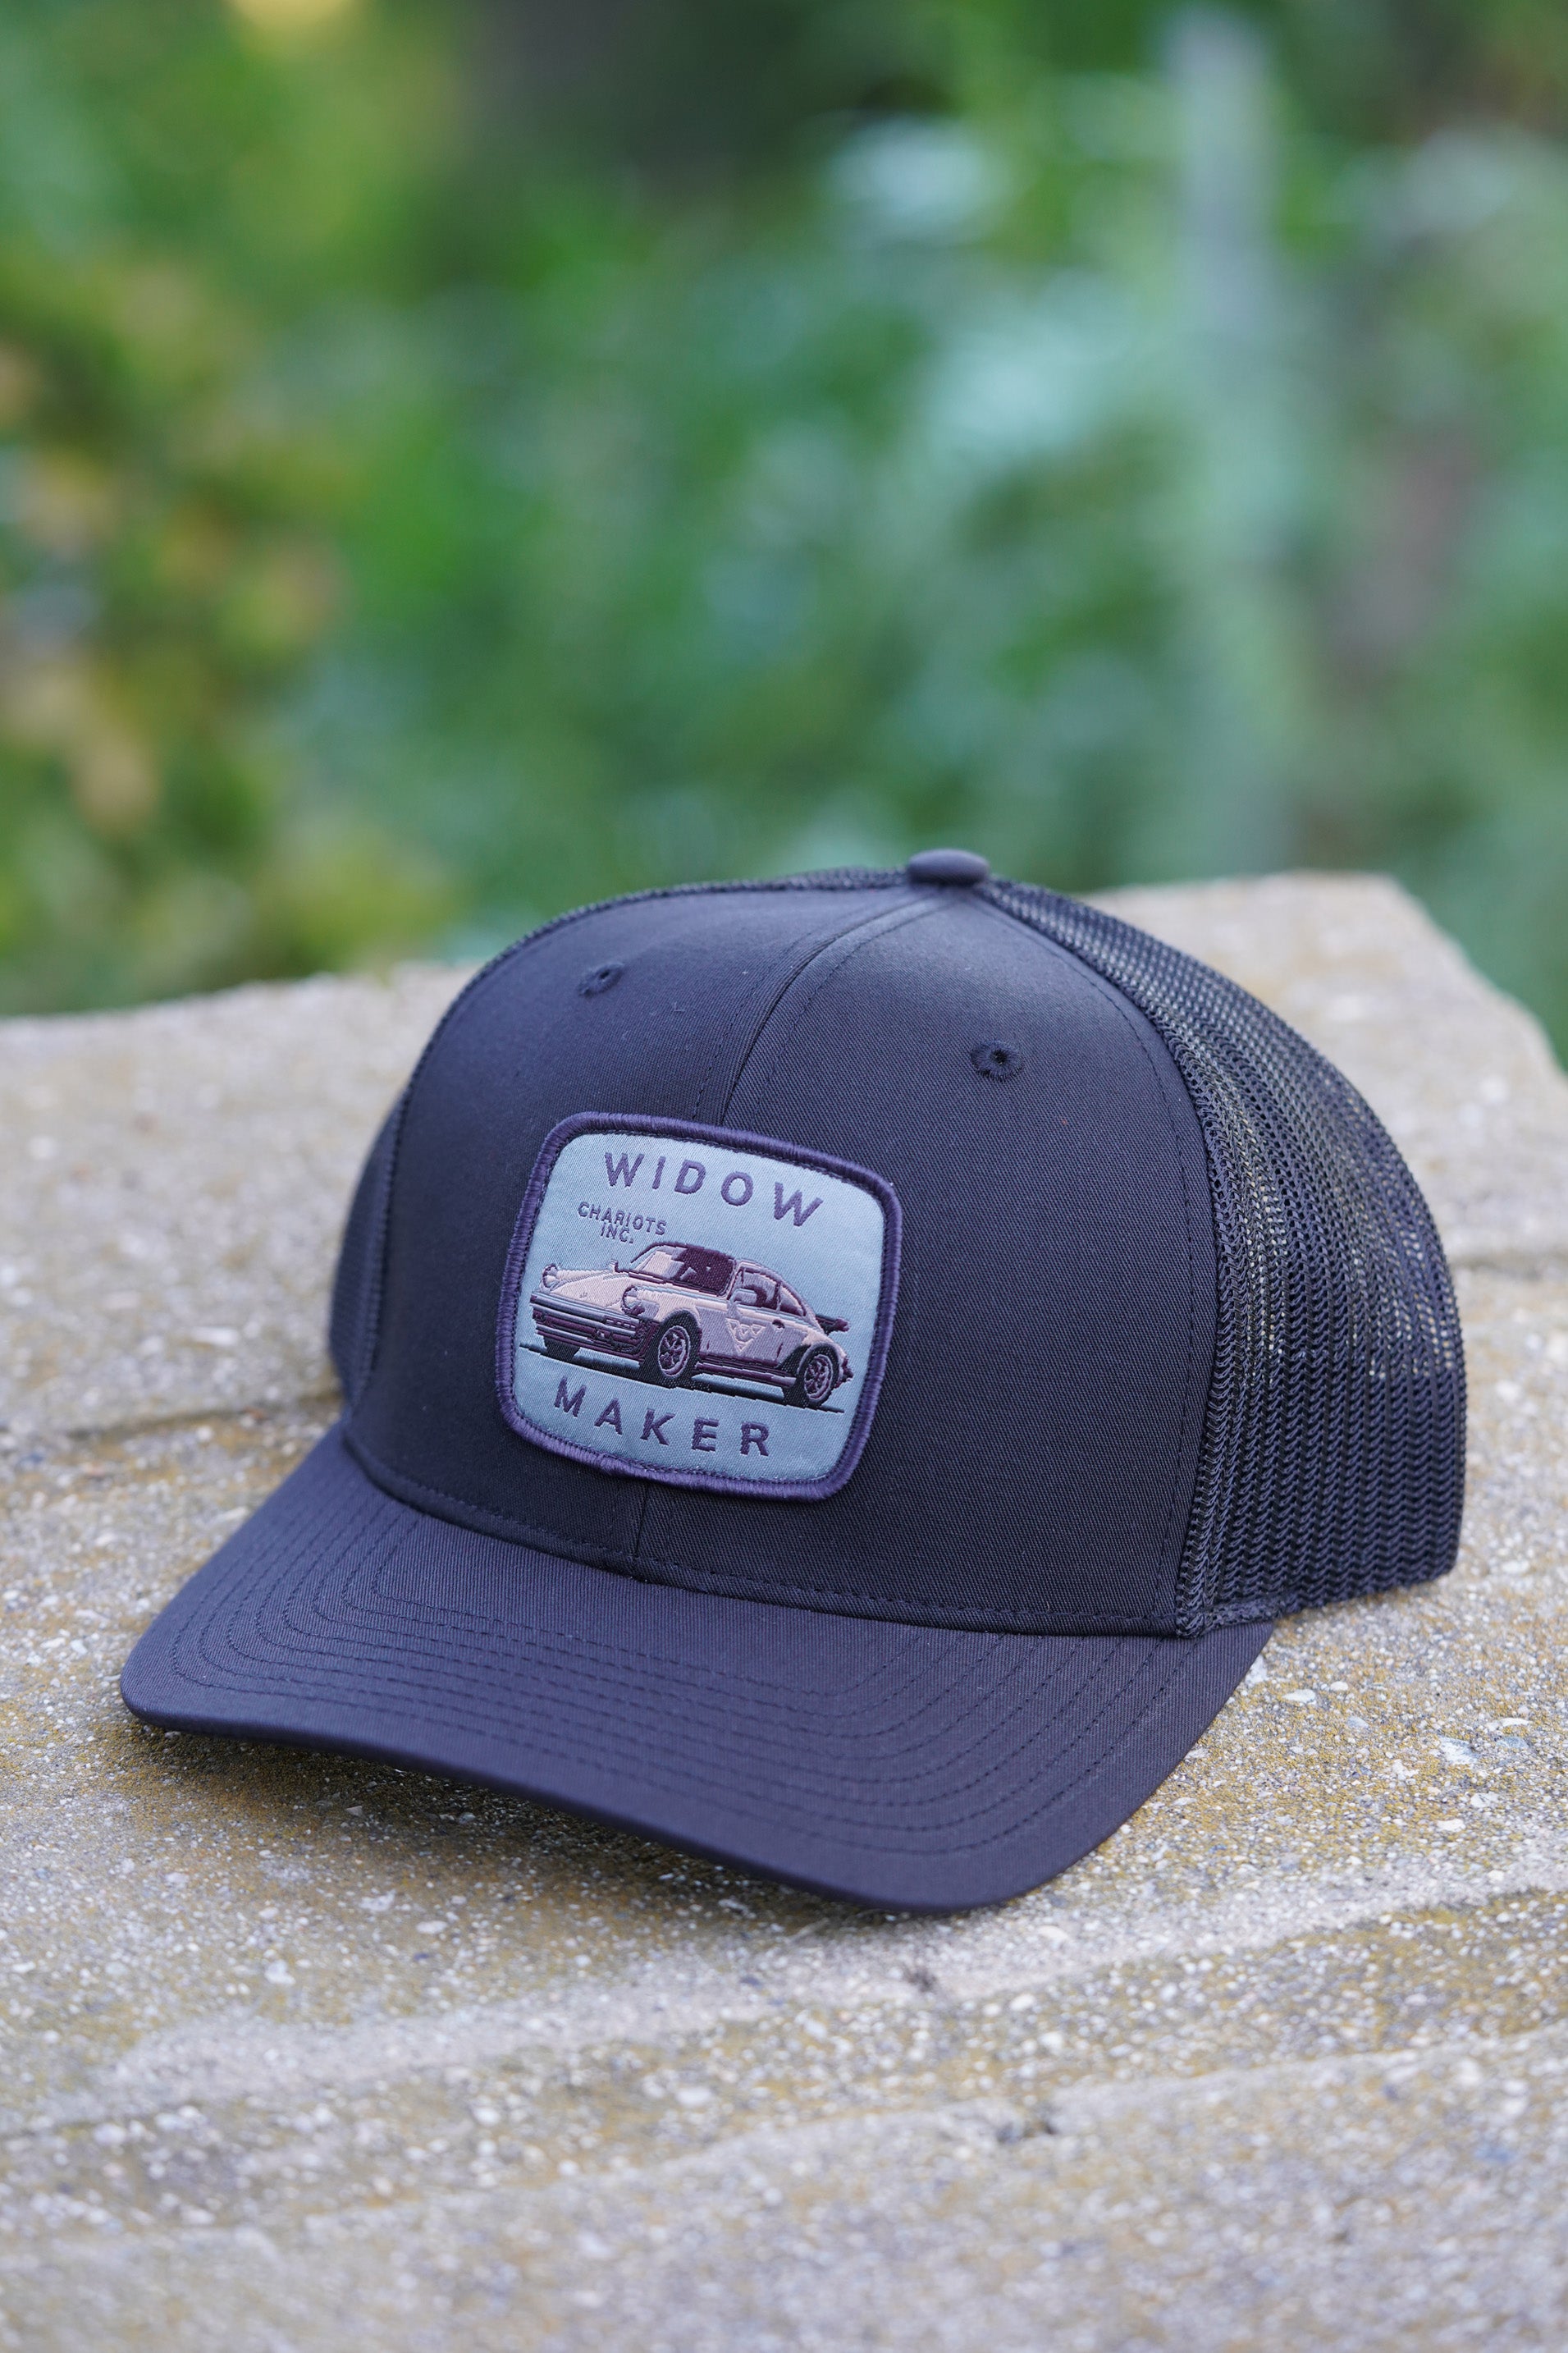 WIDOWMAKER V.2 BLUE (Black Premium Trucker Hat)